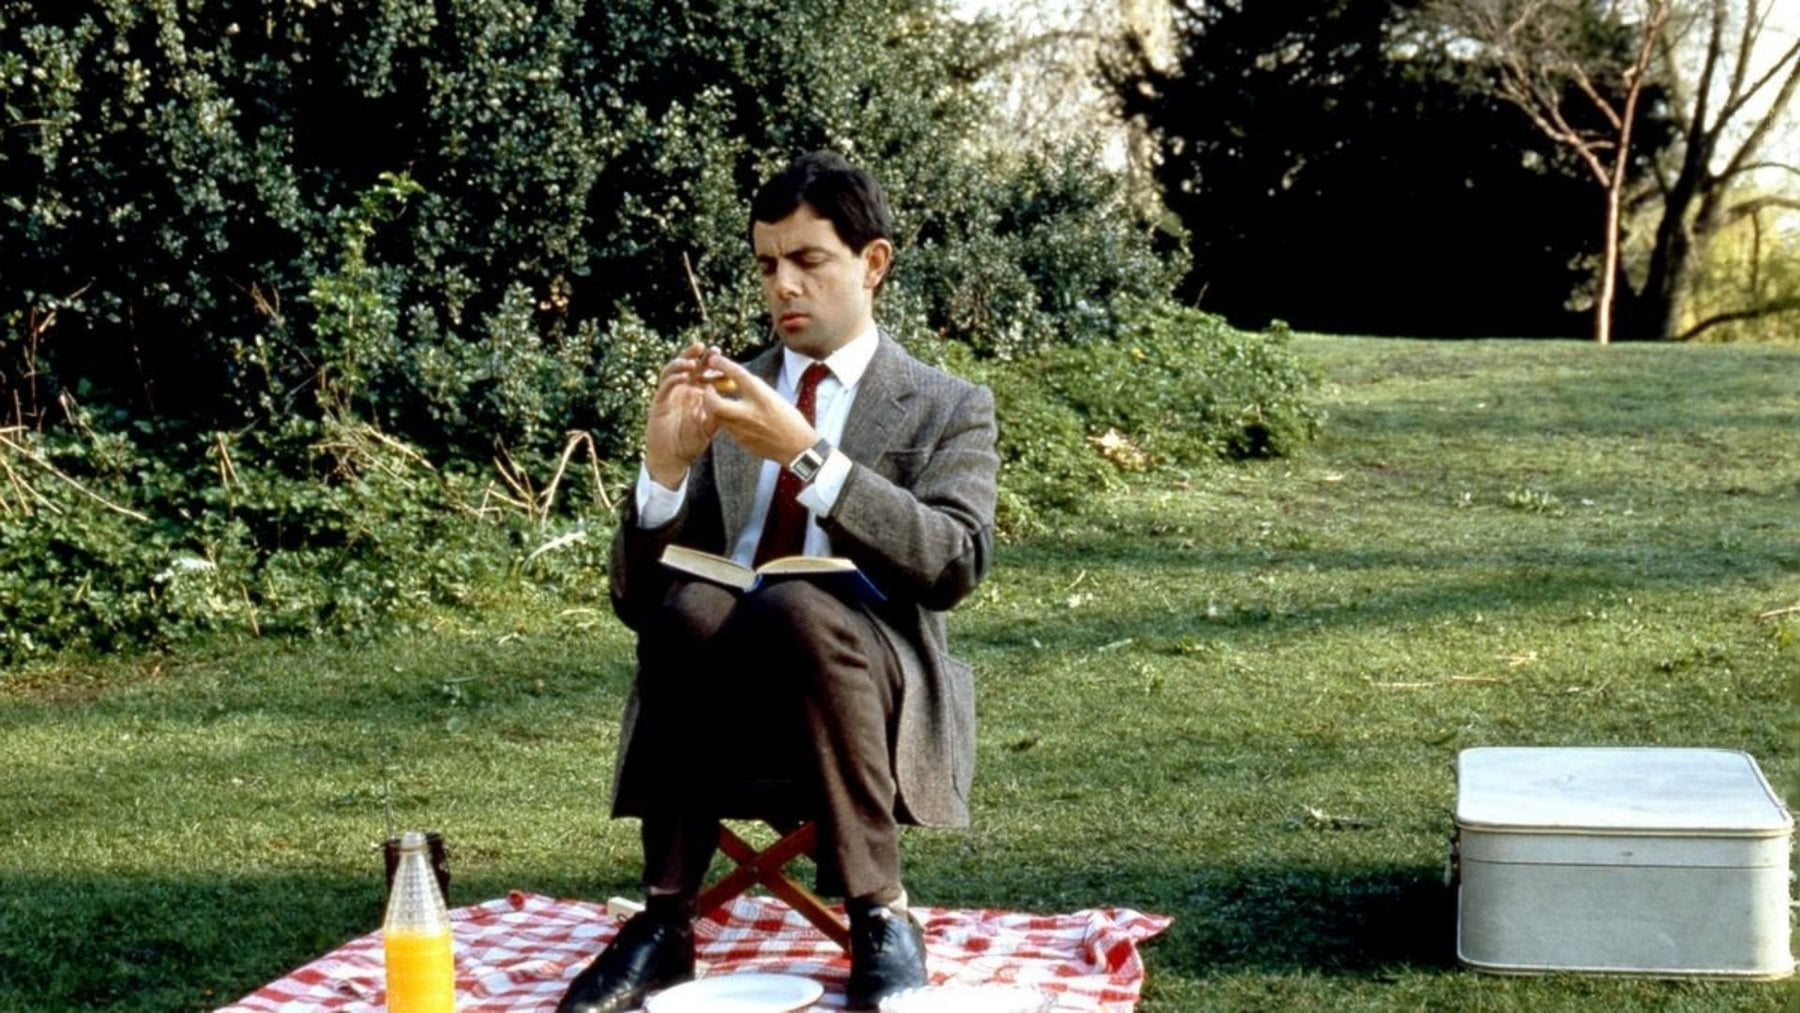 Mr Bean having a picnic